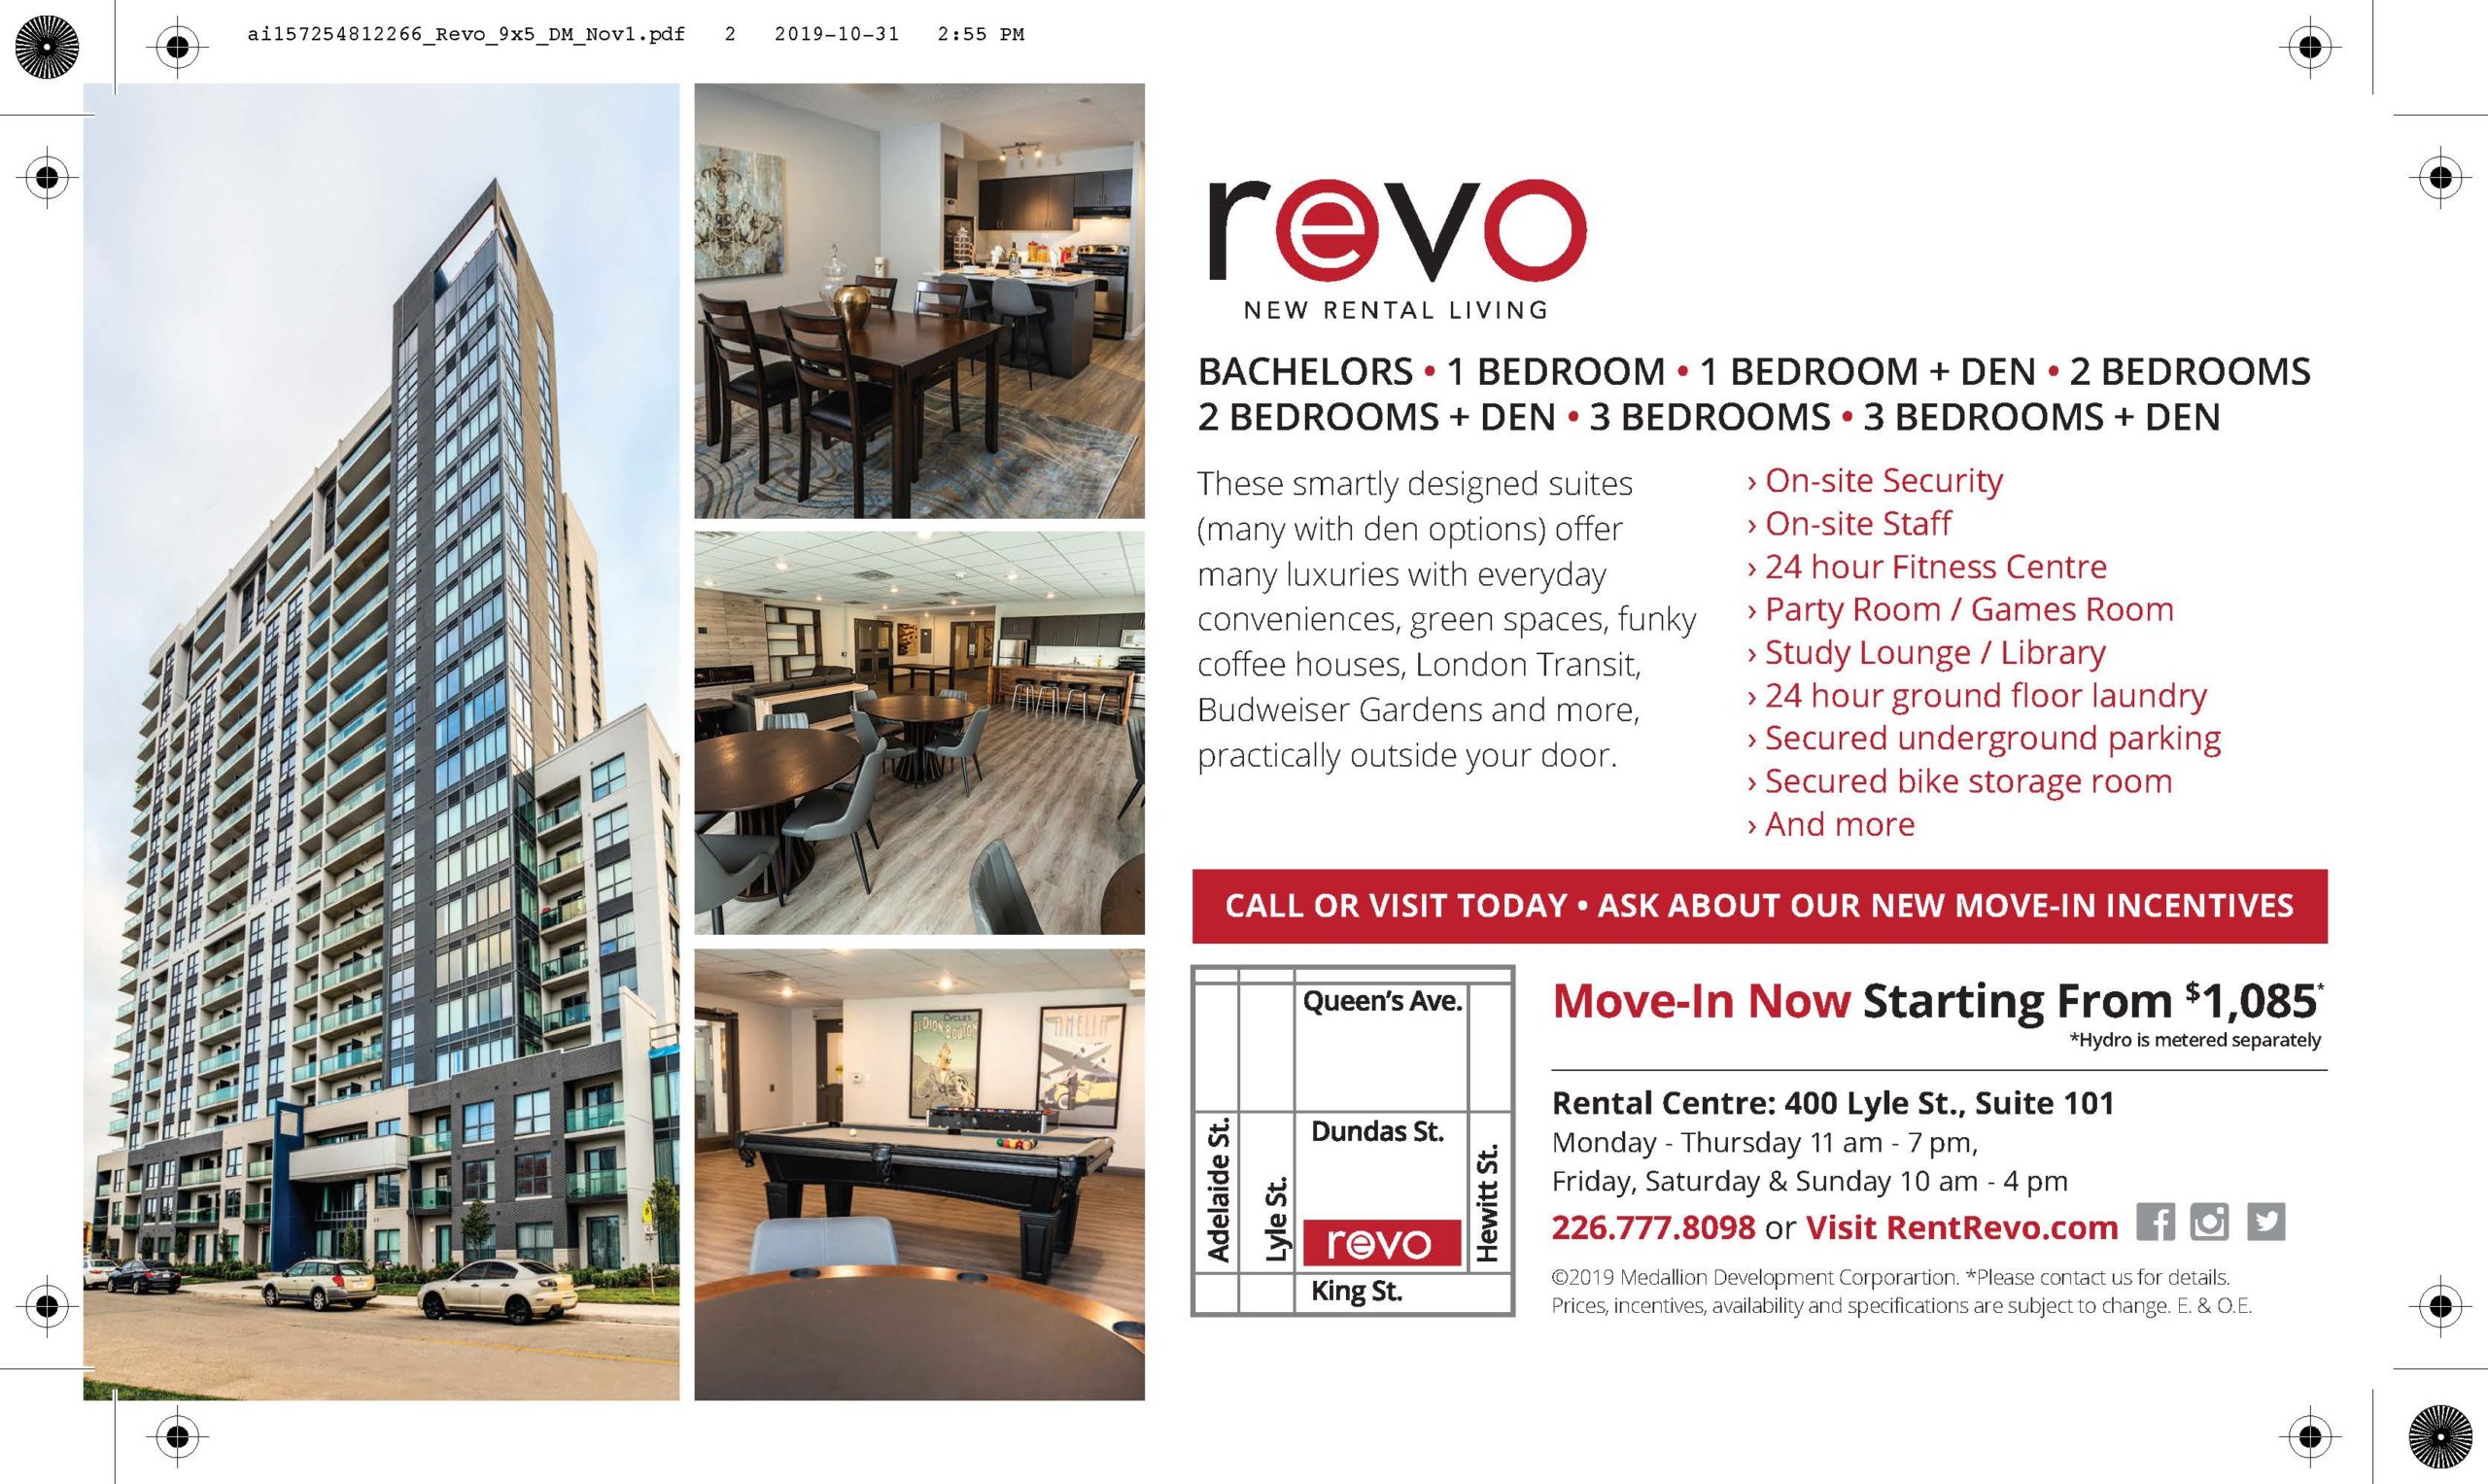 Revo LOndon Luxury Living  9x5 DM eproof Page 2 scaled - Sample Design & Printing